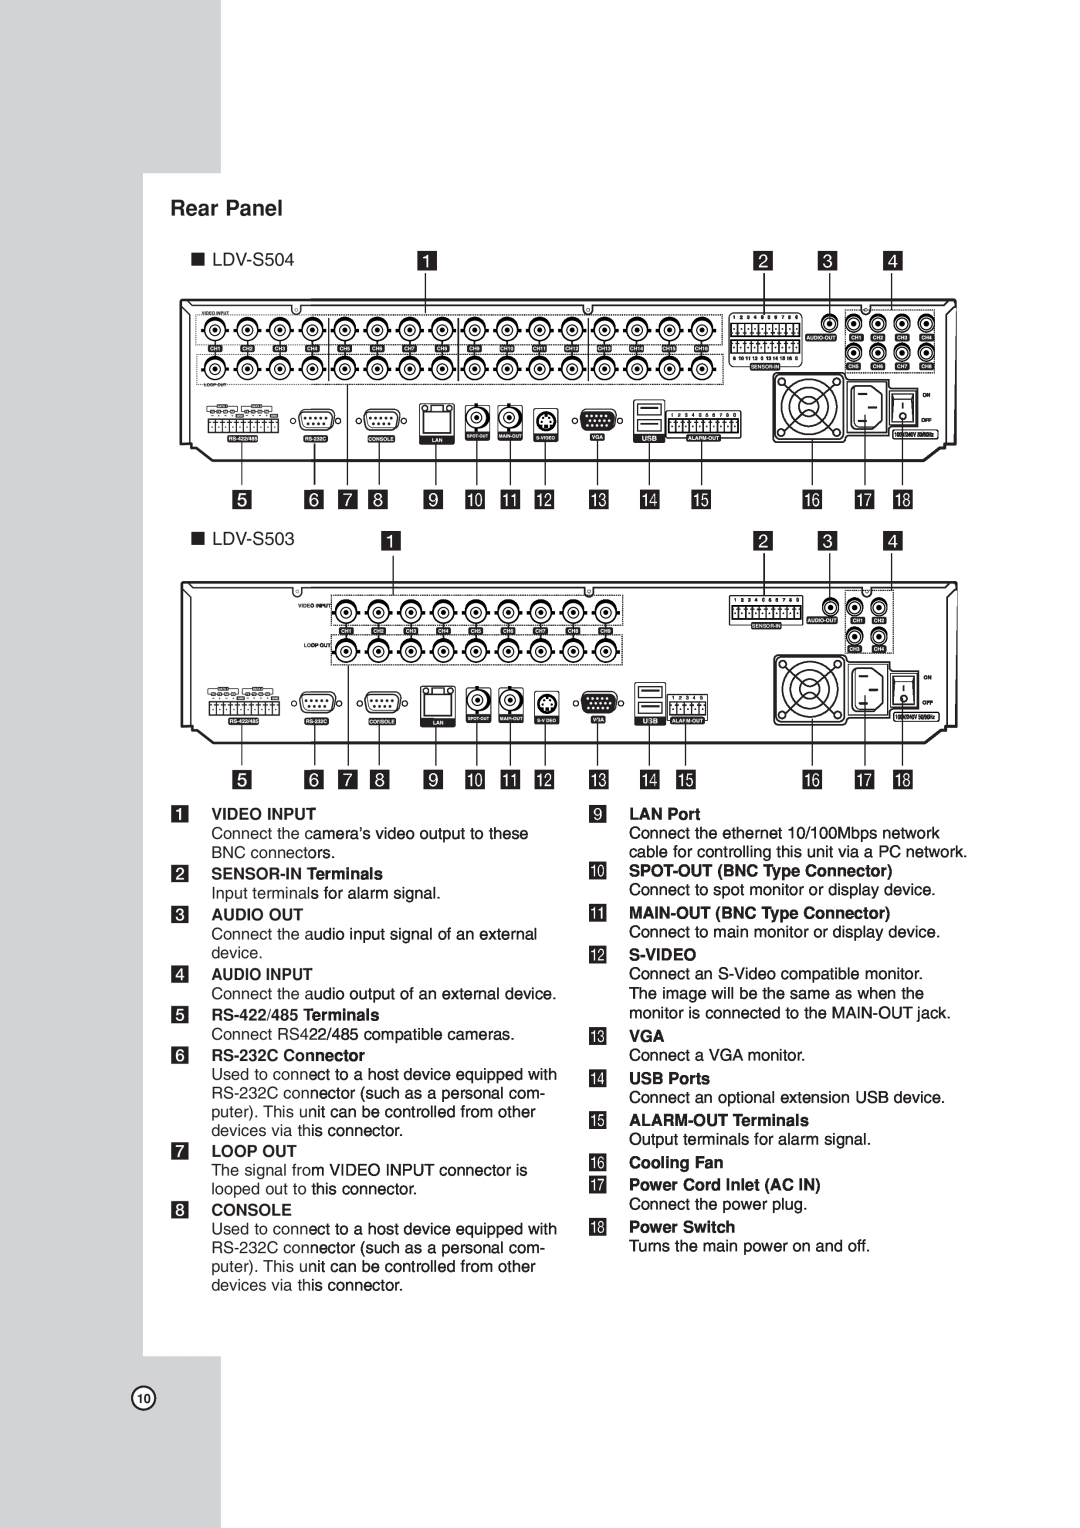 LG Electronics owner manual Rear Panel, x LDV-S504, b c d, e f g h i j k l m n o, p q r, x LDV-S503 